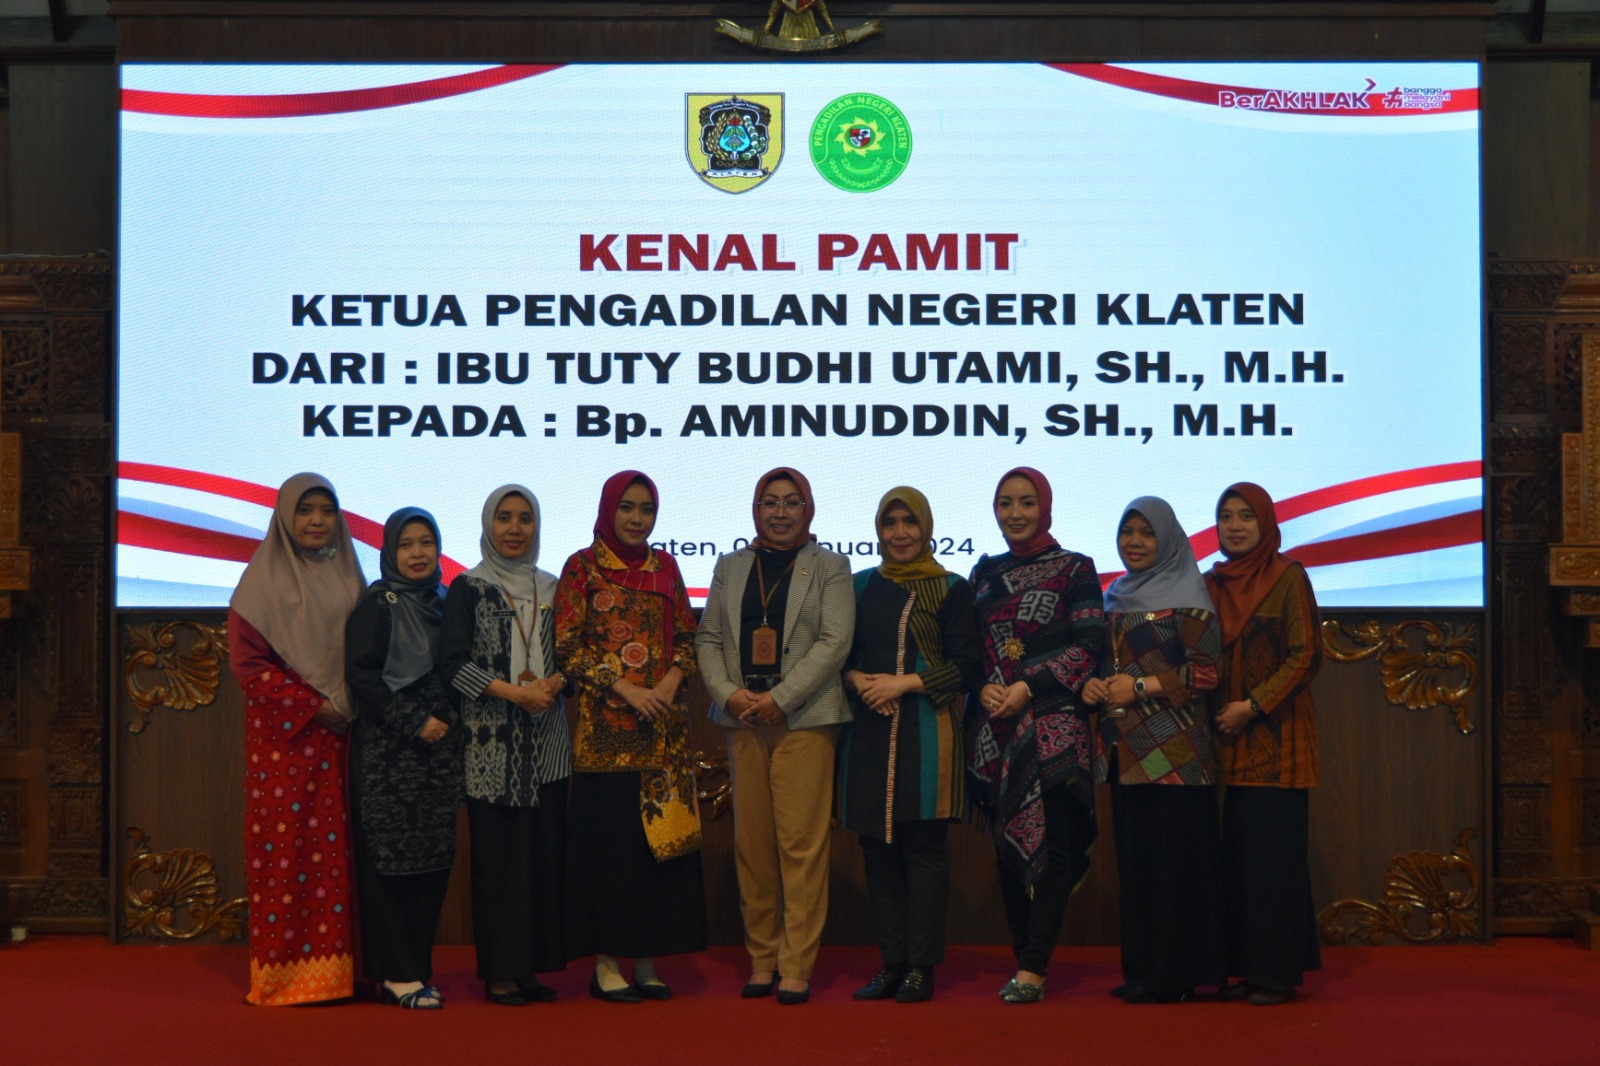 Ketua Pengadilan Negeri Yogyakarta Menghadiri Kenal Pamit bersama Pemerintah Kabupaten Klaten